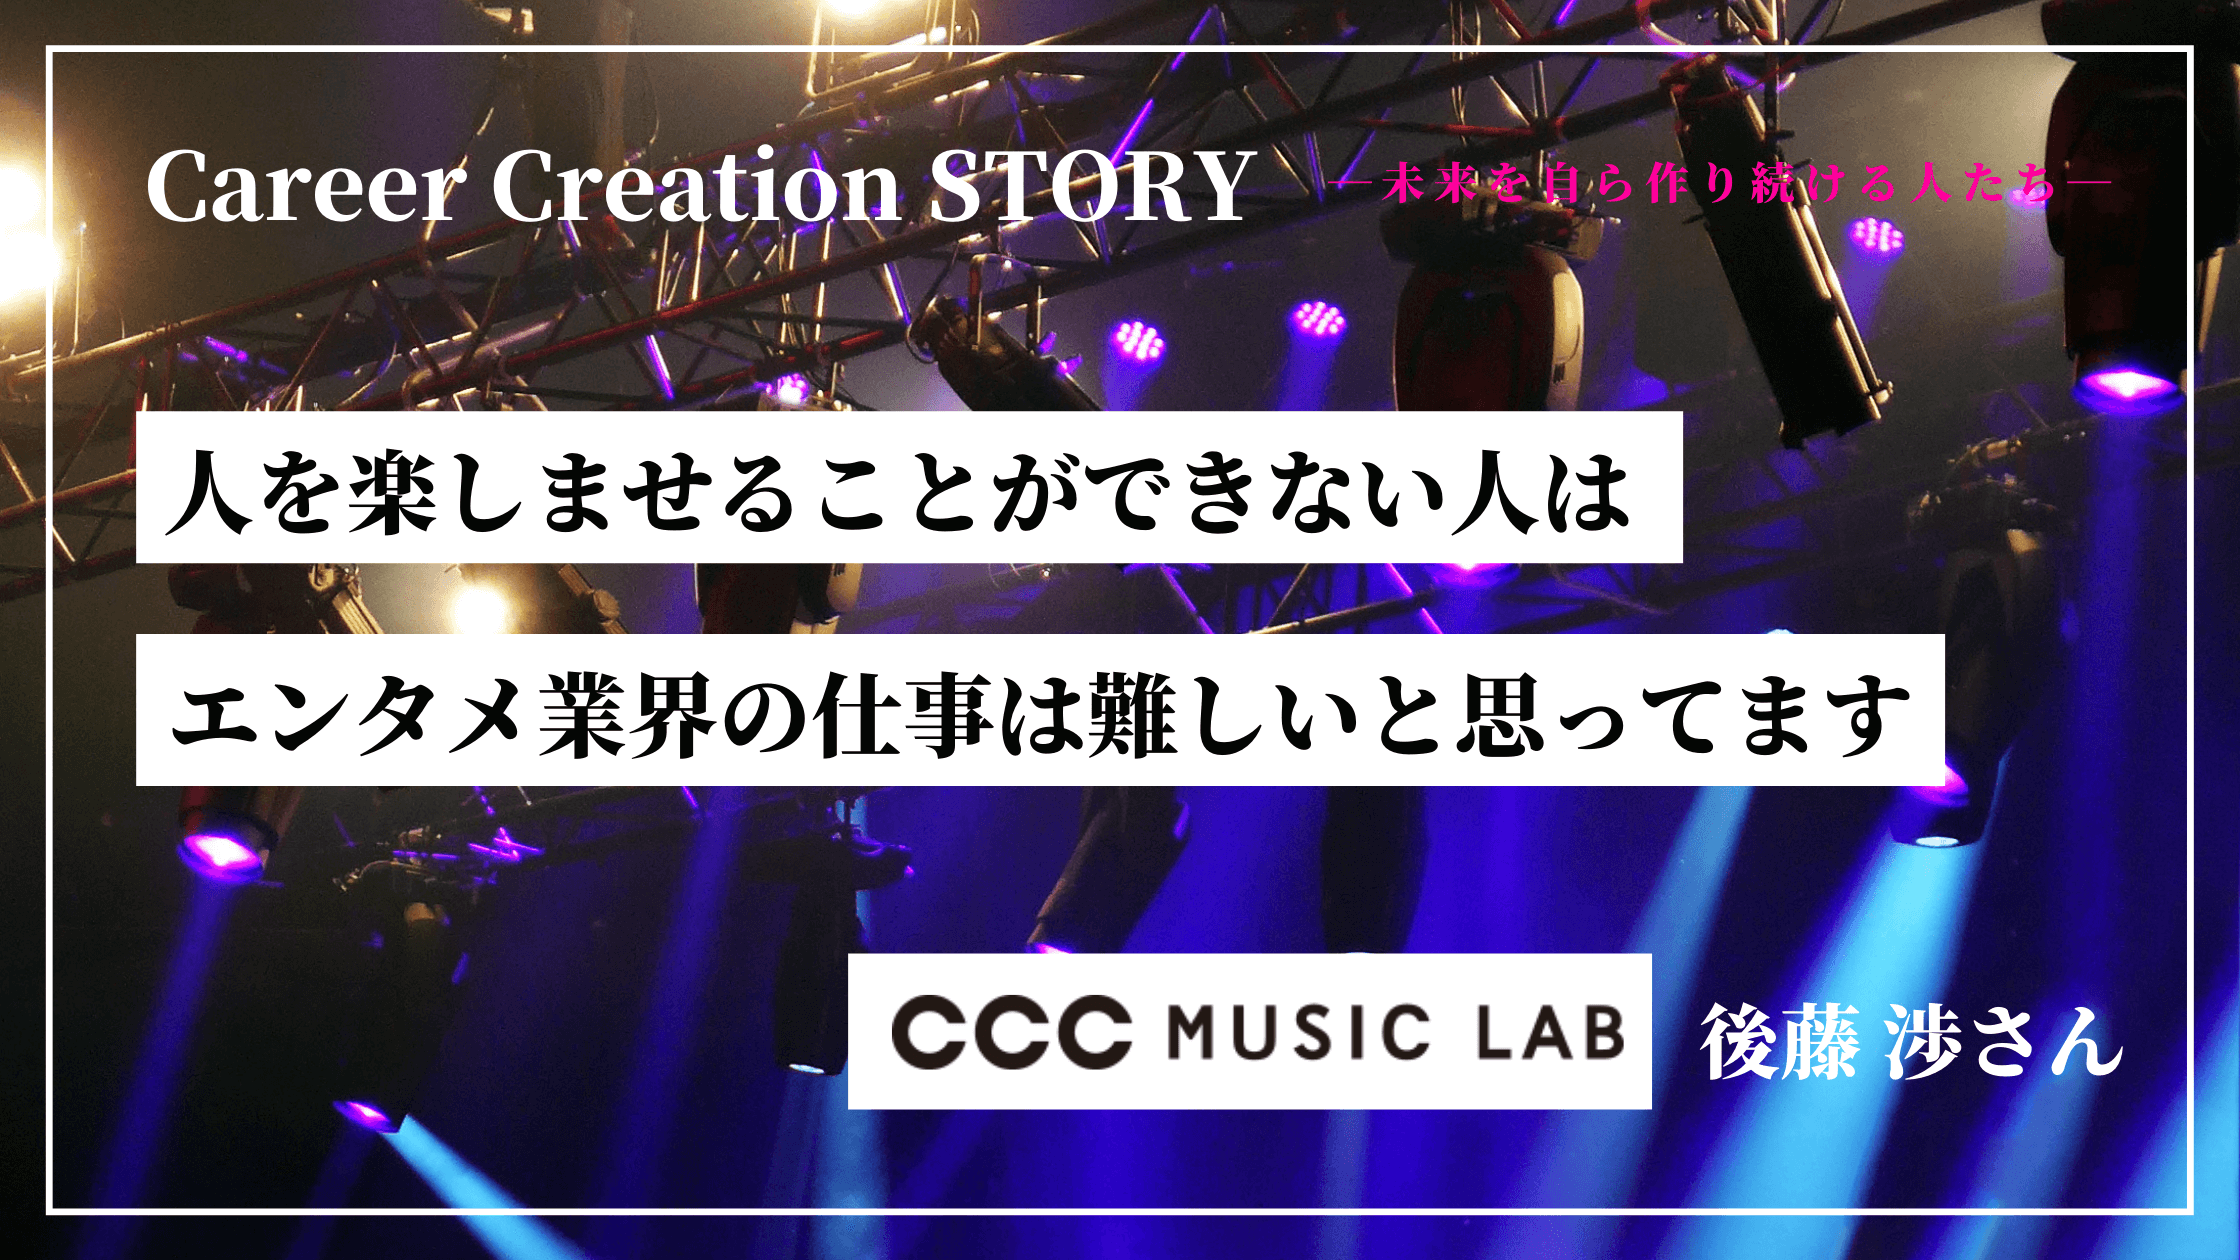 Career Creation STORY #16：株式会社リノベリング 西えみりさん